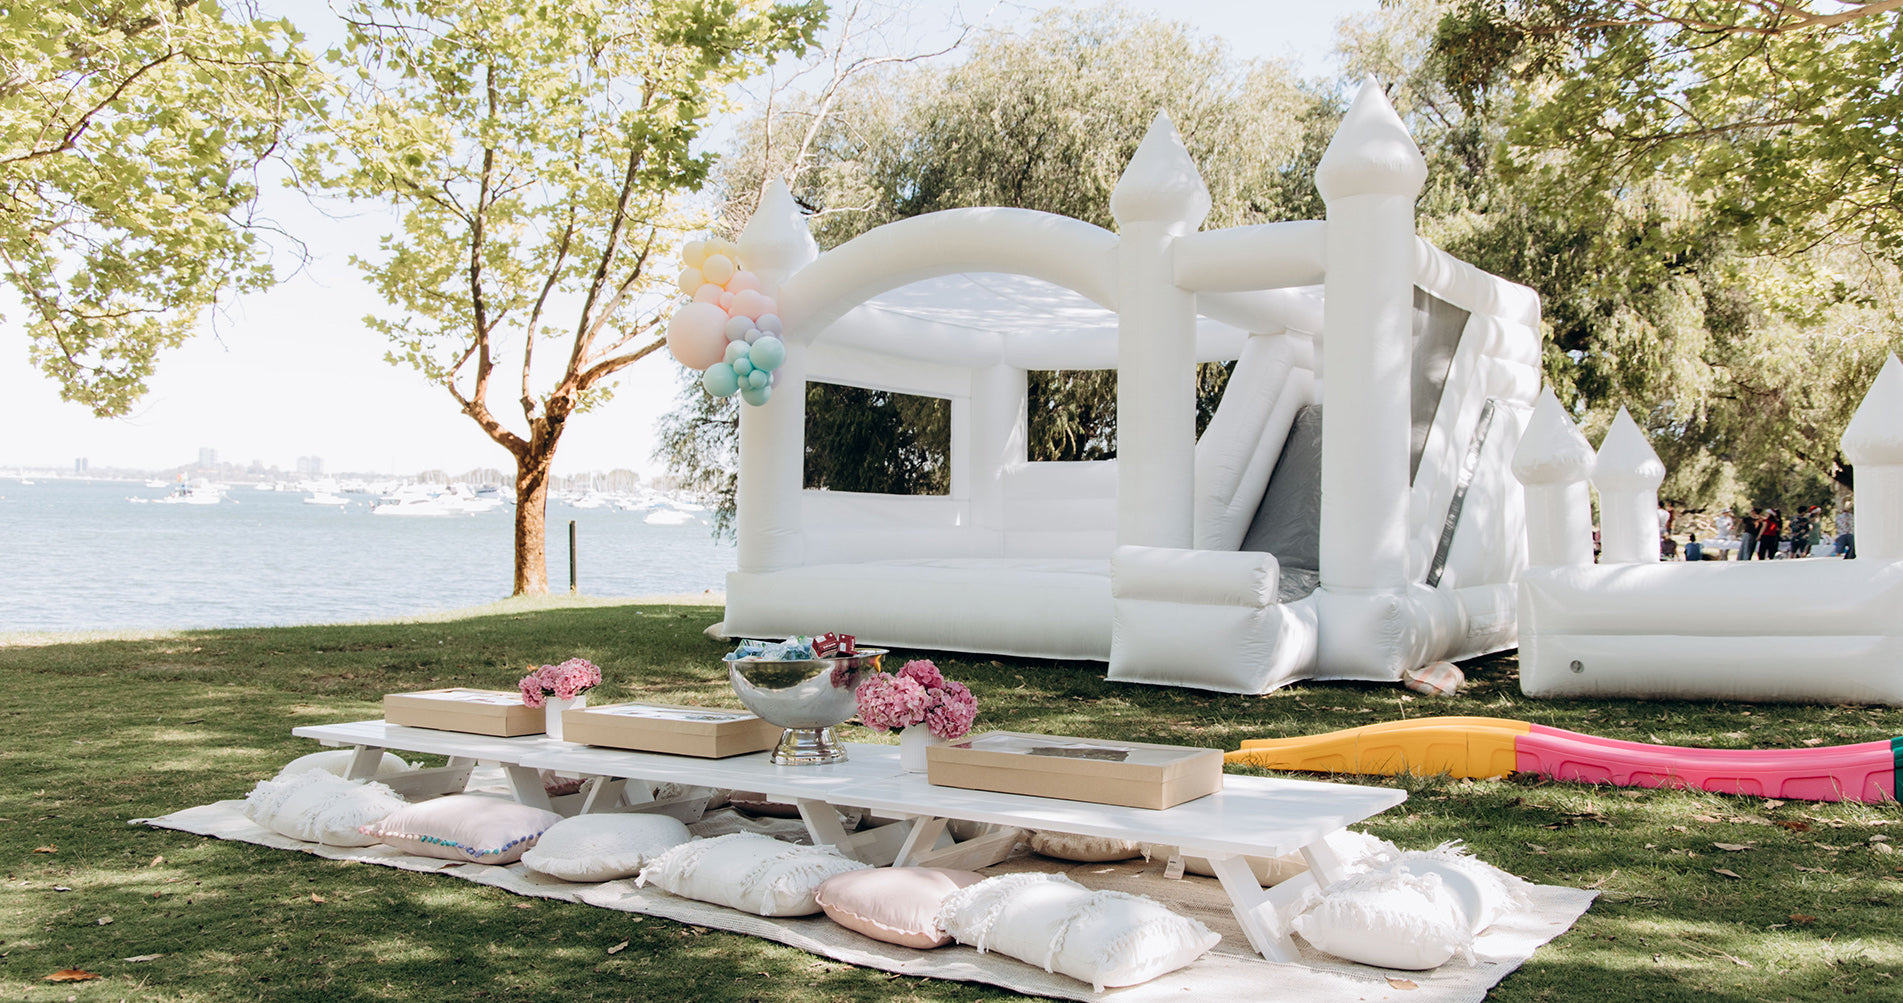 Whitebouncyhouse - Buy white bounce house, white wedding bouncy castle – WHITEBOUNCYHOUSE